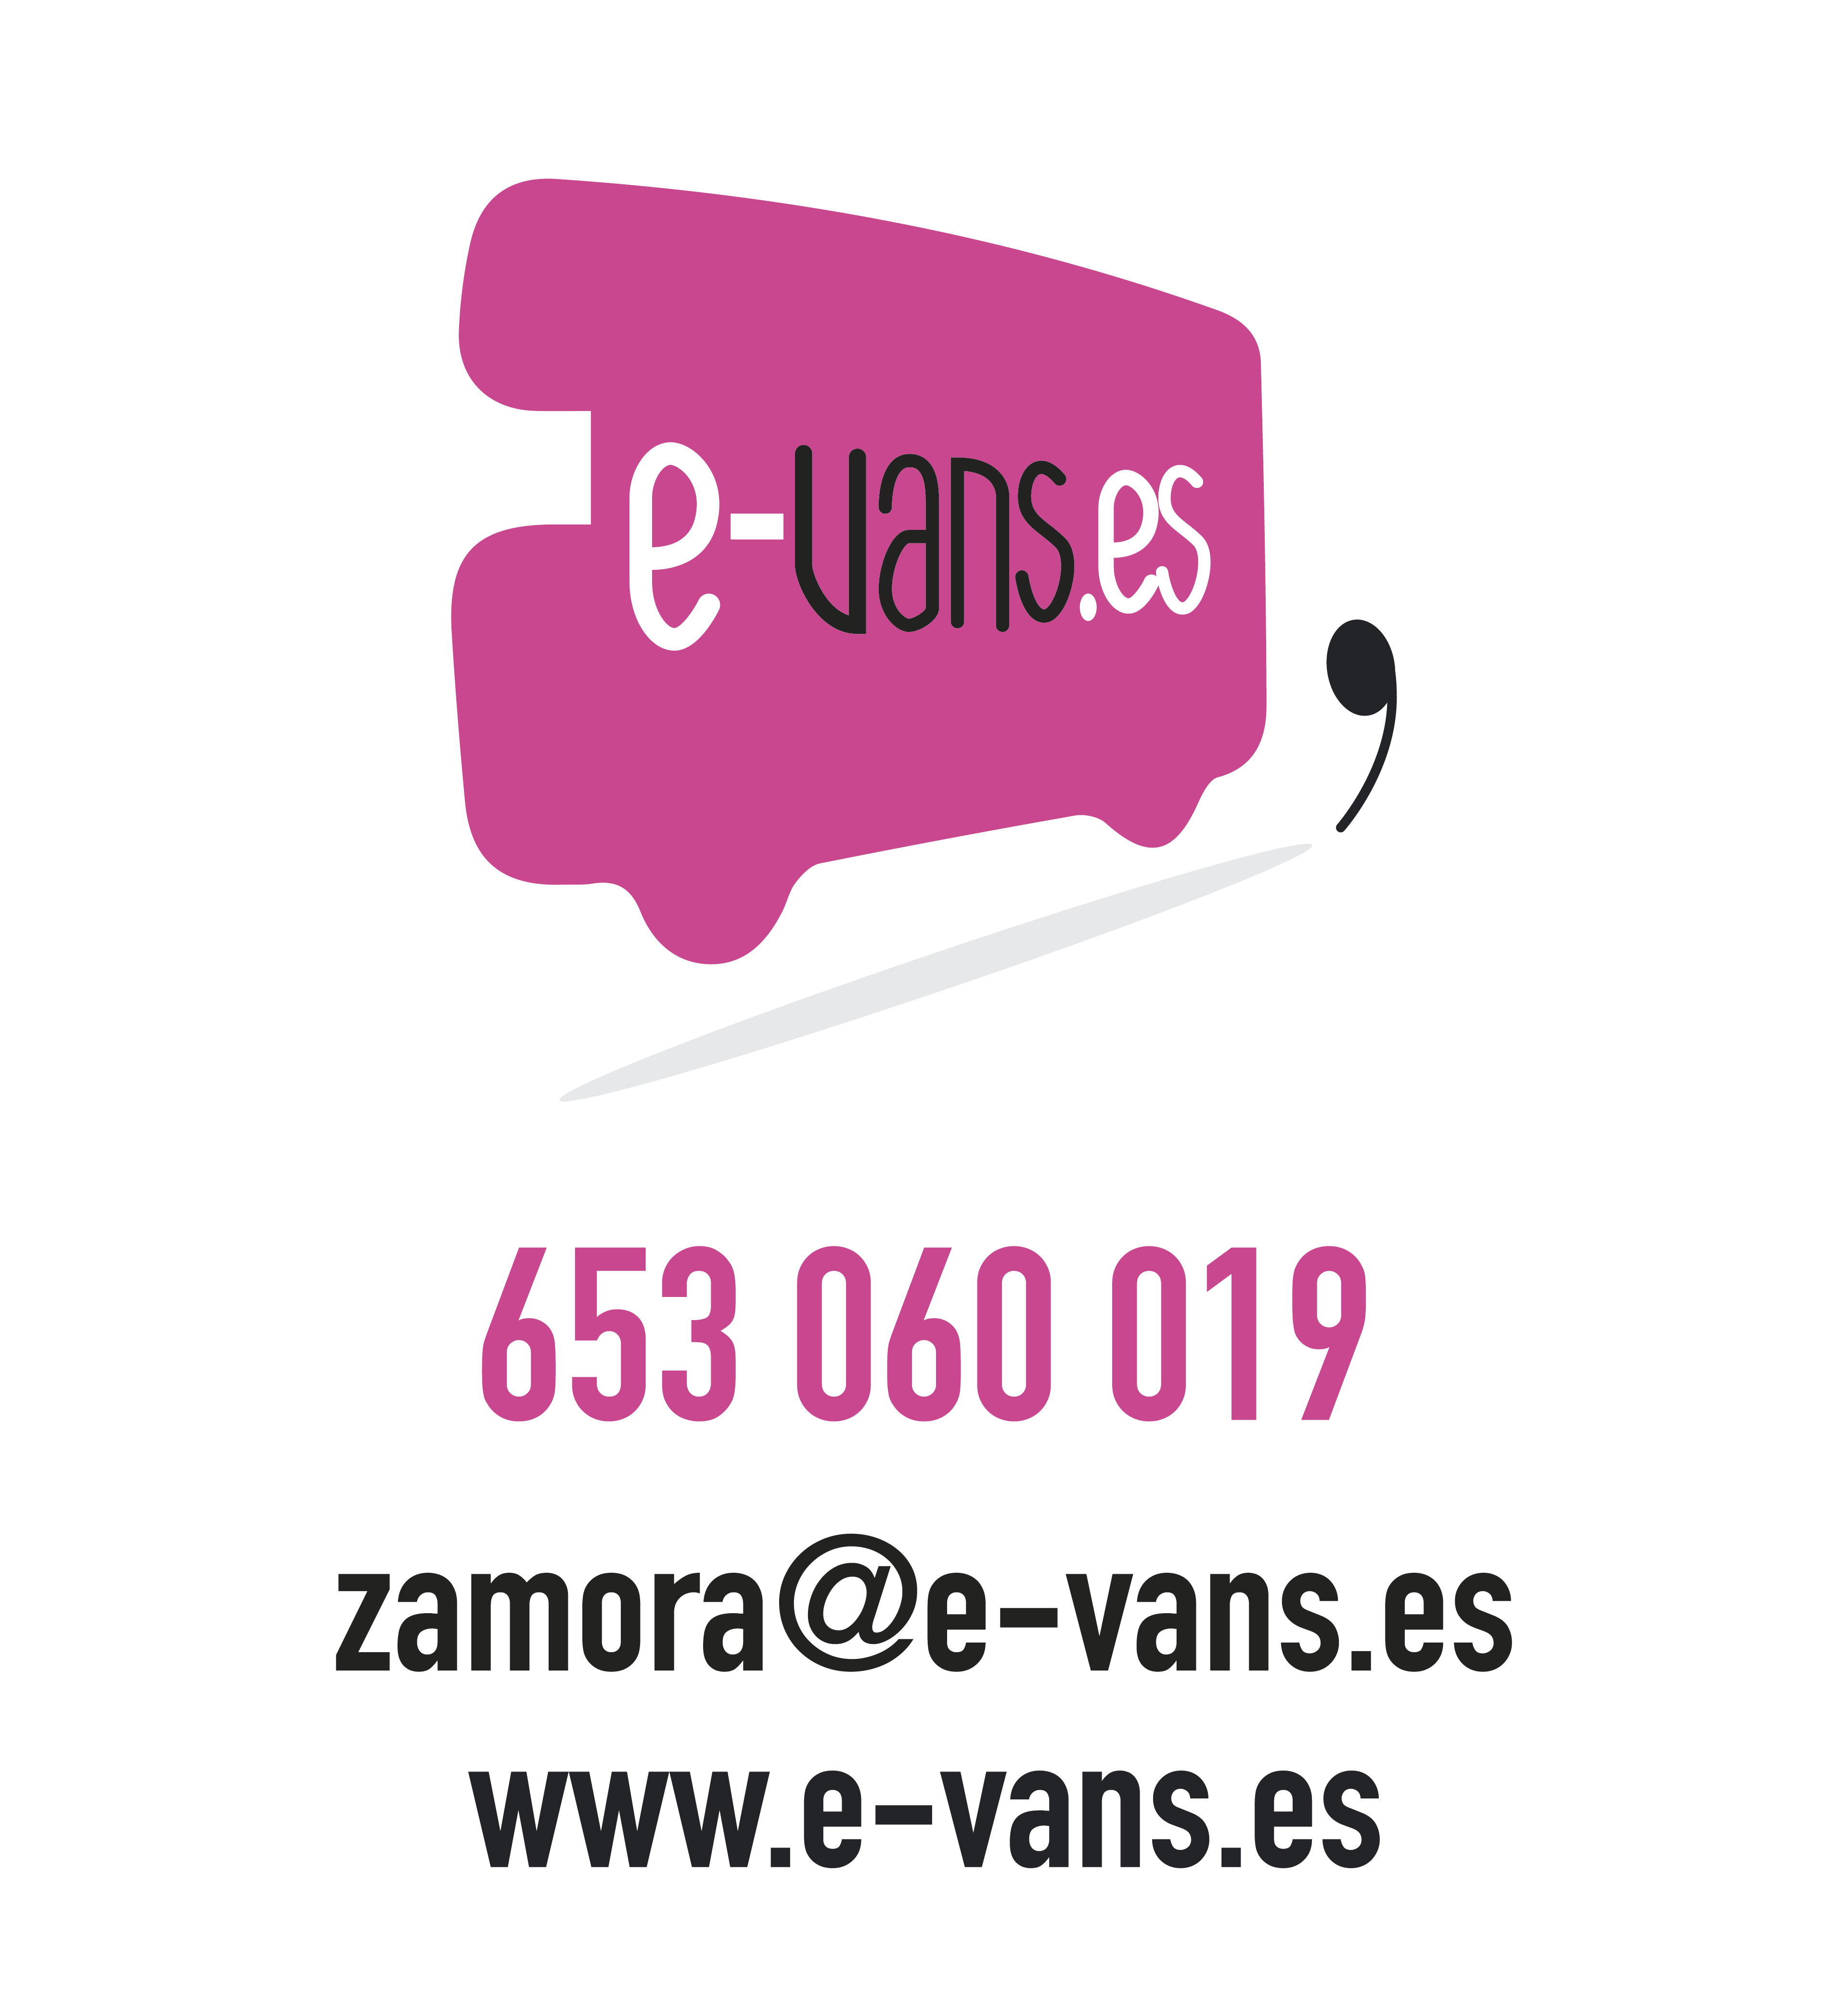 Zamora e-vans